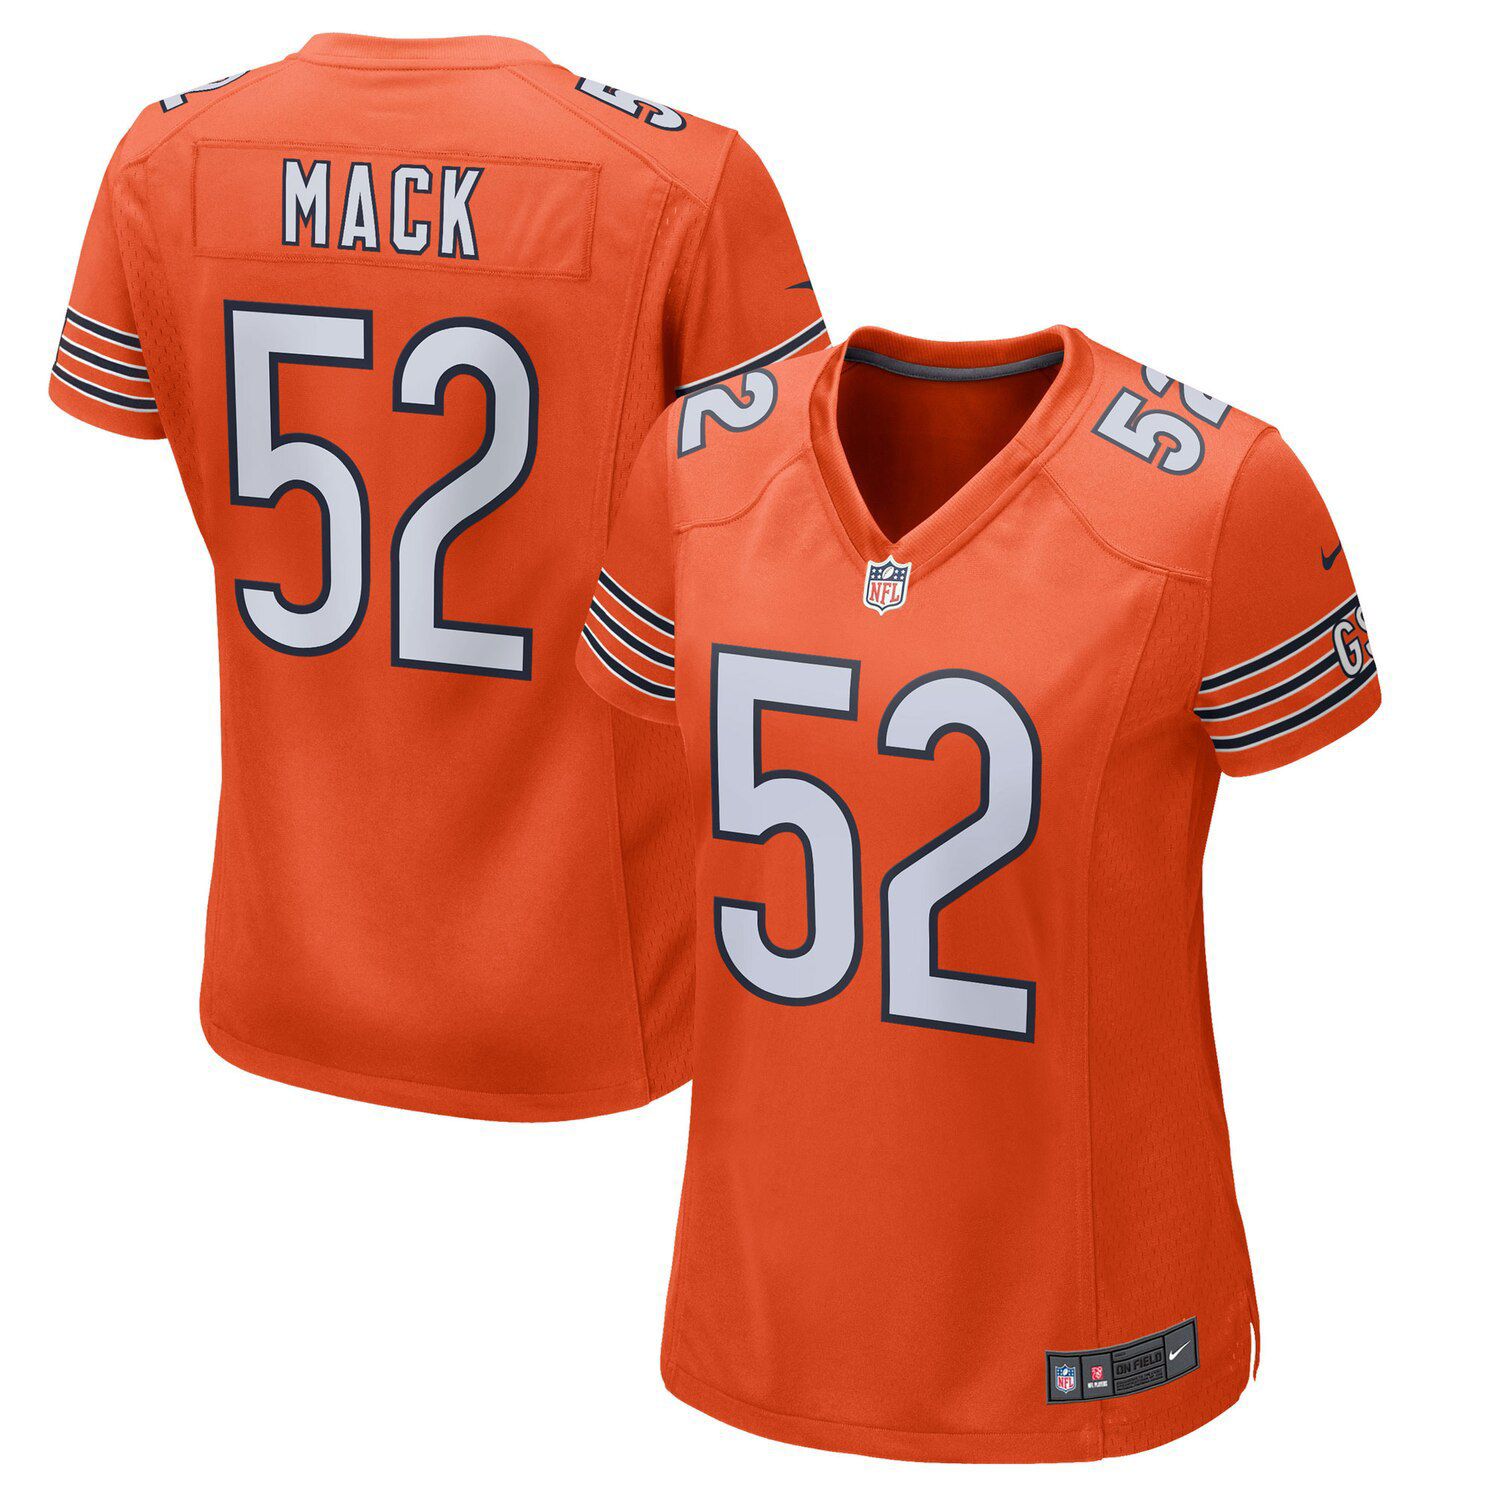 orange mack jersey